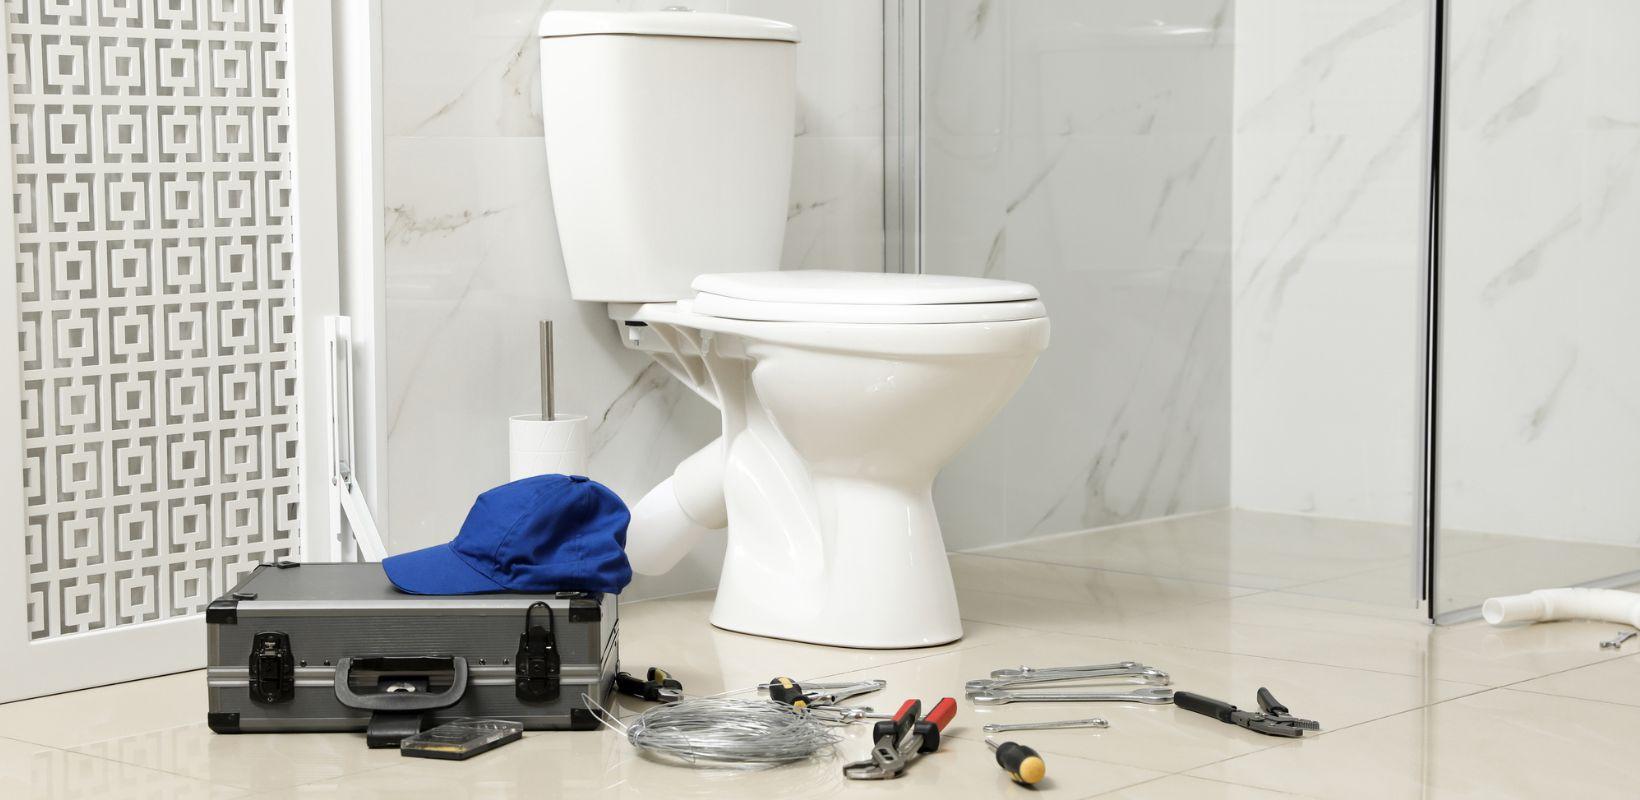 Service installation toilette plombier vdk 3